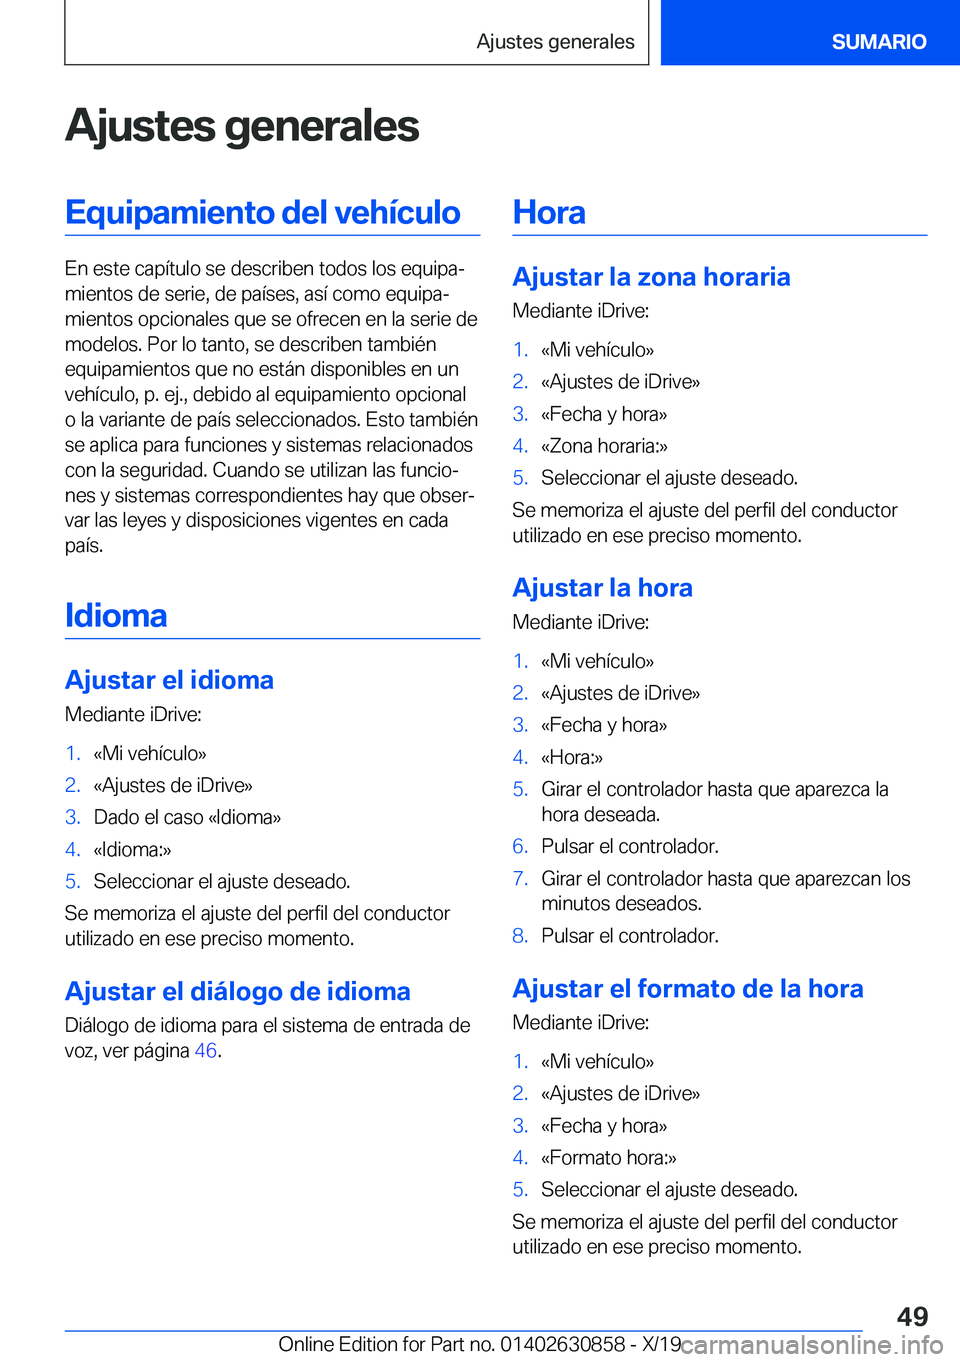 BMW 4 SERIES GRAN COUPE 2020  Manuales de Empleo (in Spanish) �A�j�u�s�t�e�s��g�e�n�e�r�a�l�e�s�E�q�u�i�p�a�m�i�e�n�t�o��d�e�l��v�e�h�